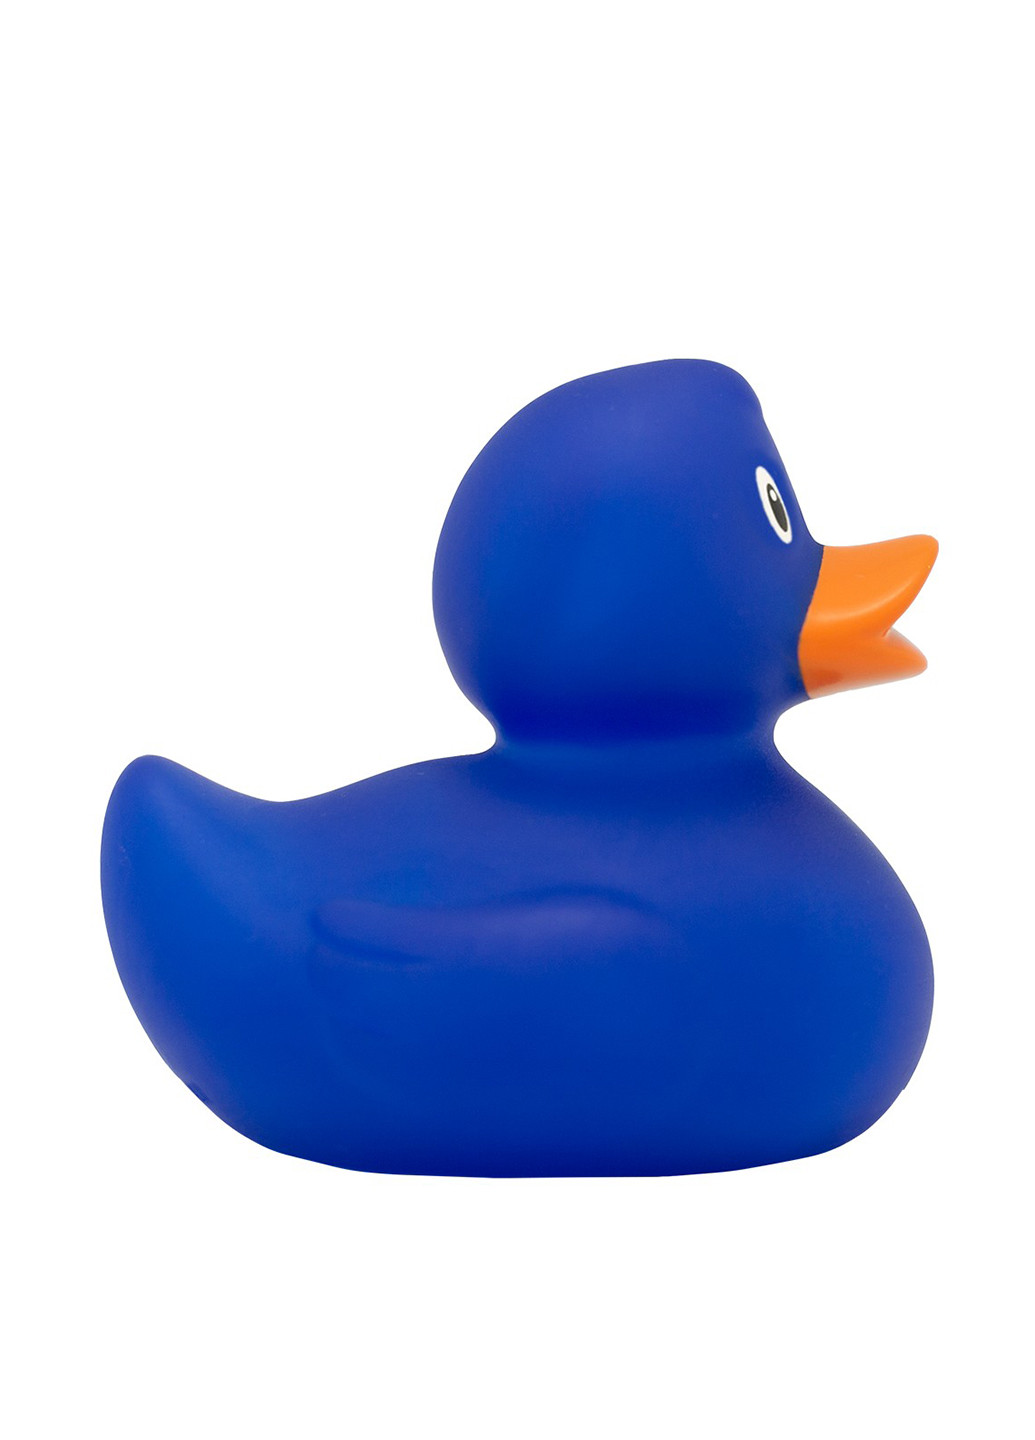 Игрушка для купания Утка Синяя, 8,5x8,5x7,5 см Funny Ducks (250618825)